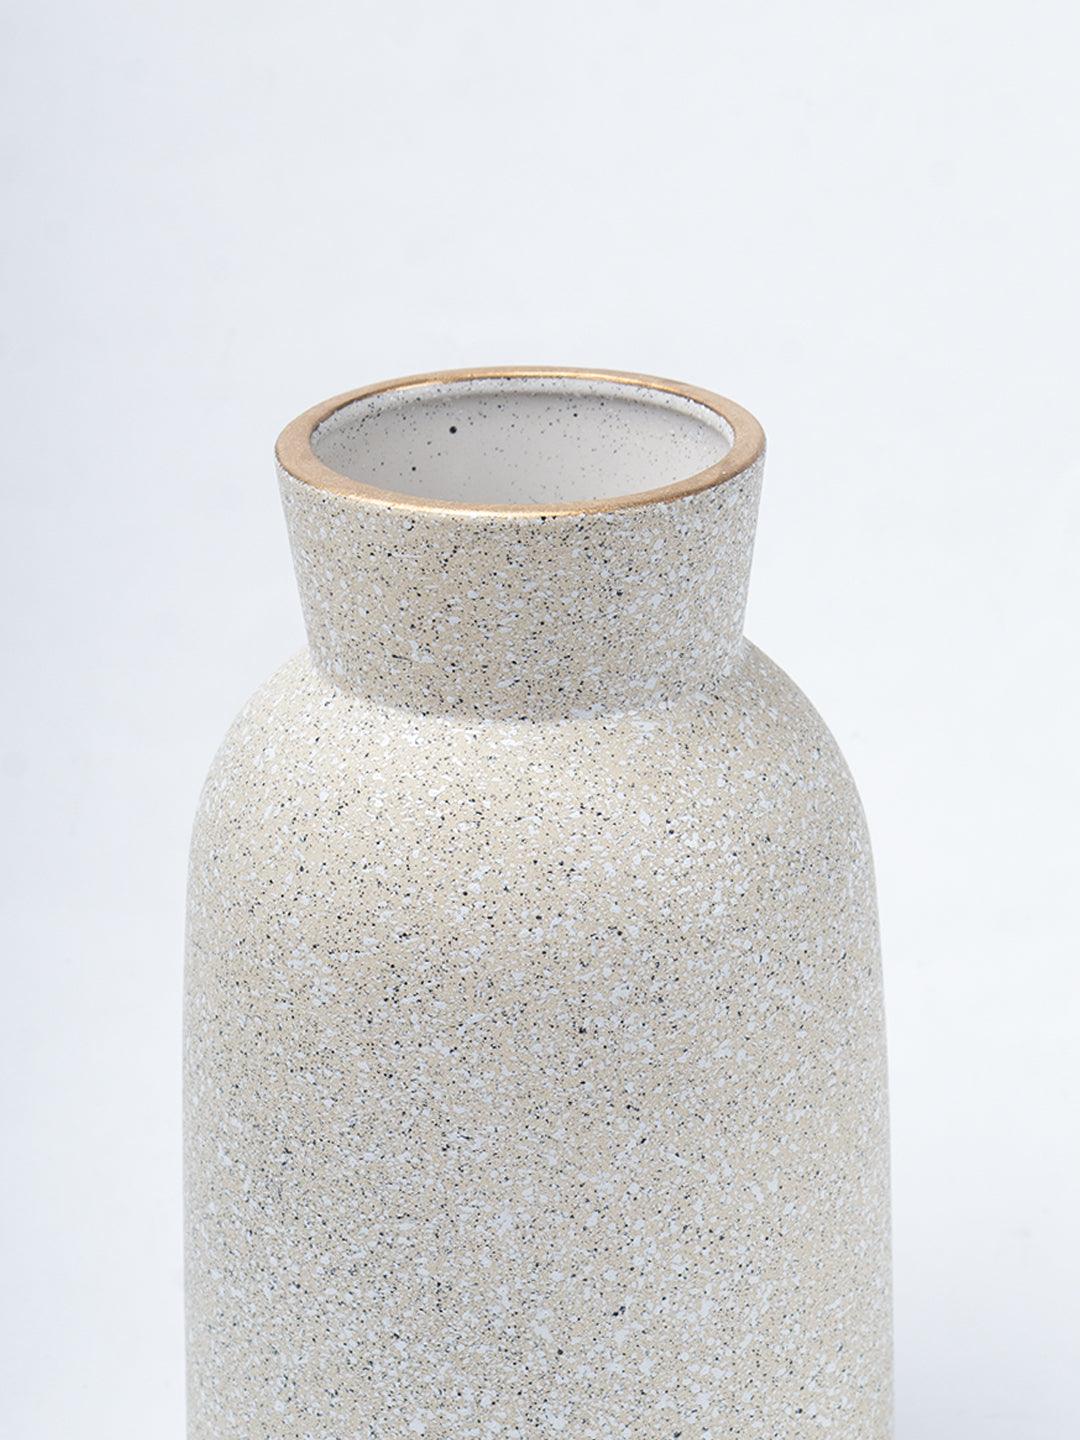 Stylish Flower Holder 'GOURD' Vase - Off White, Stone Finish - 4